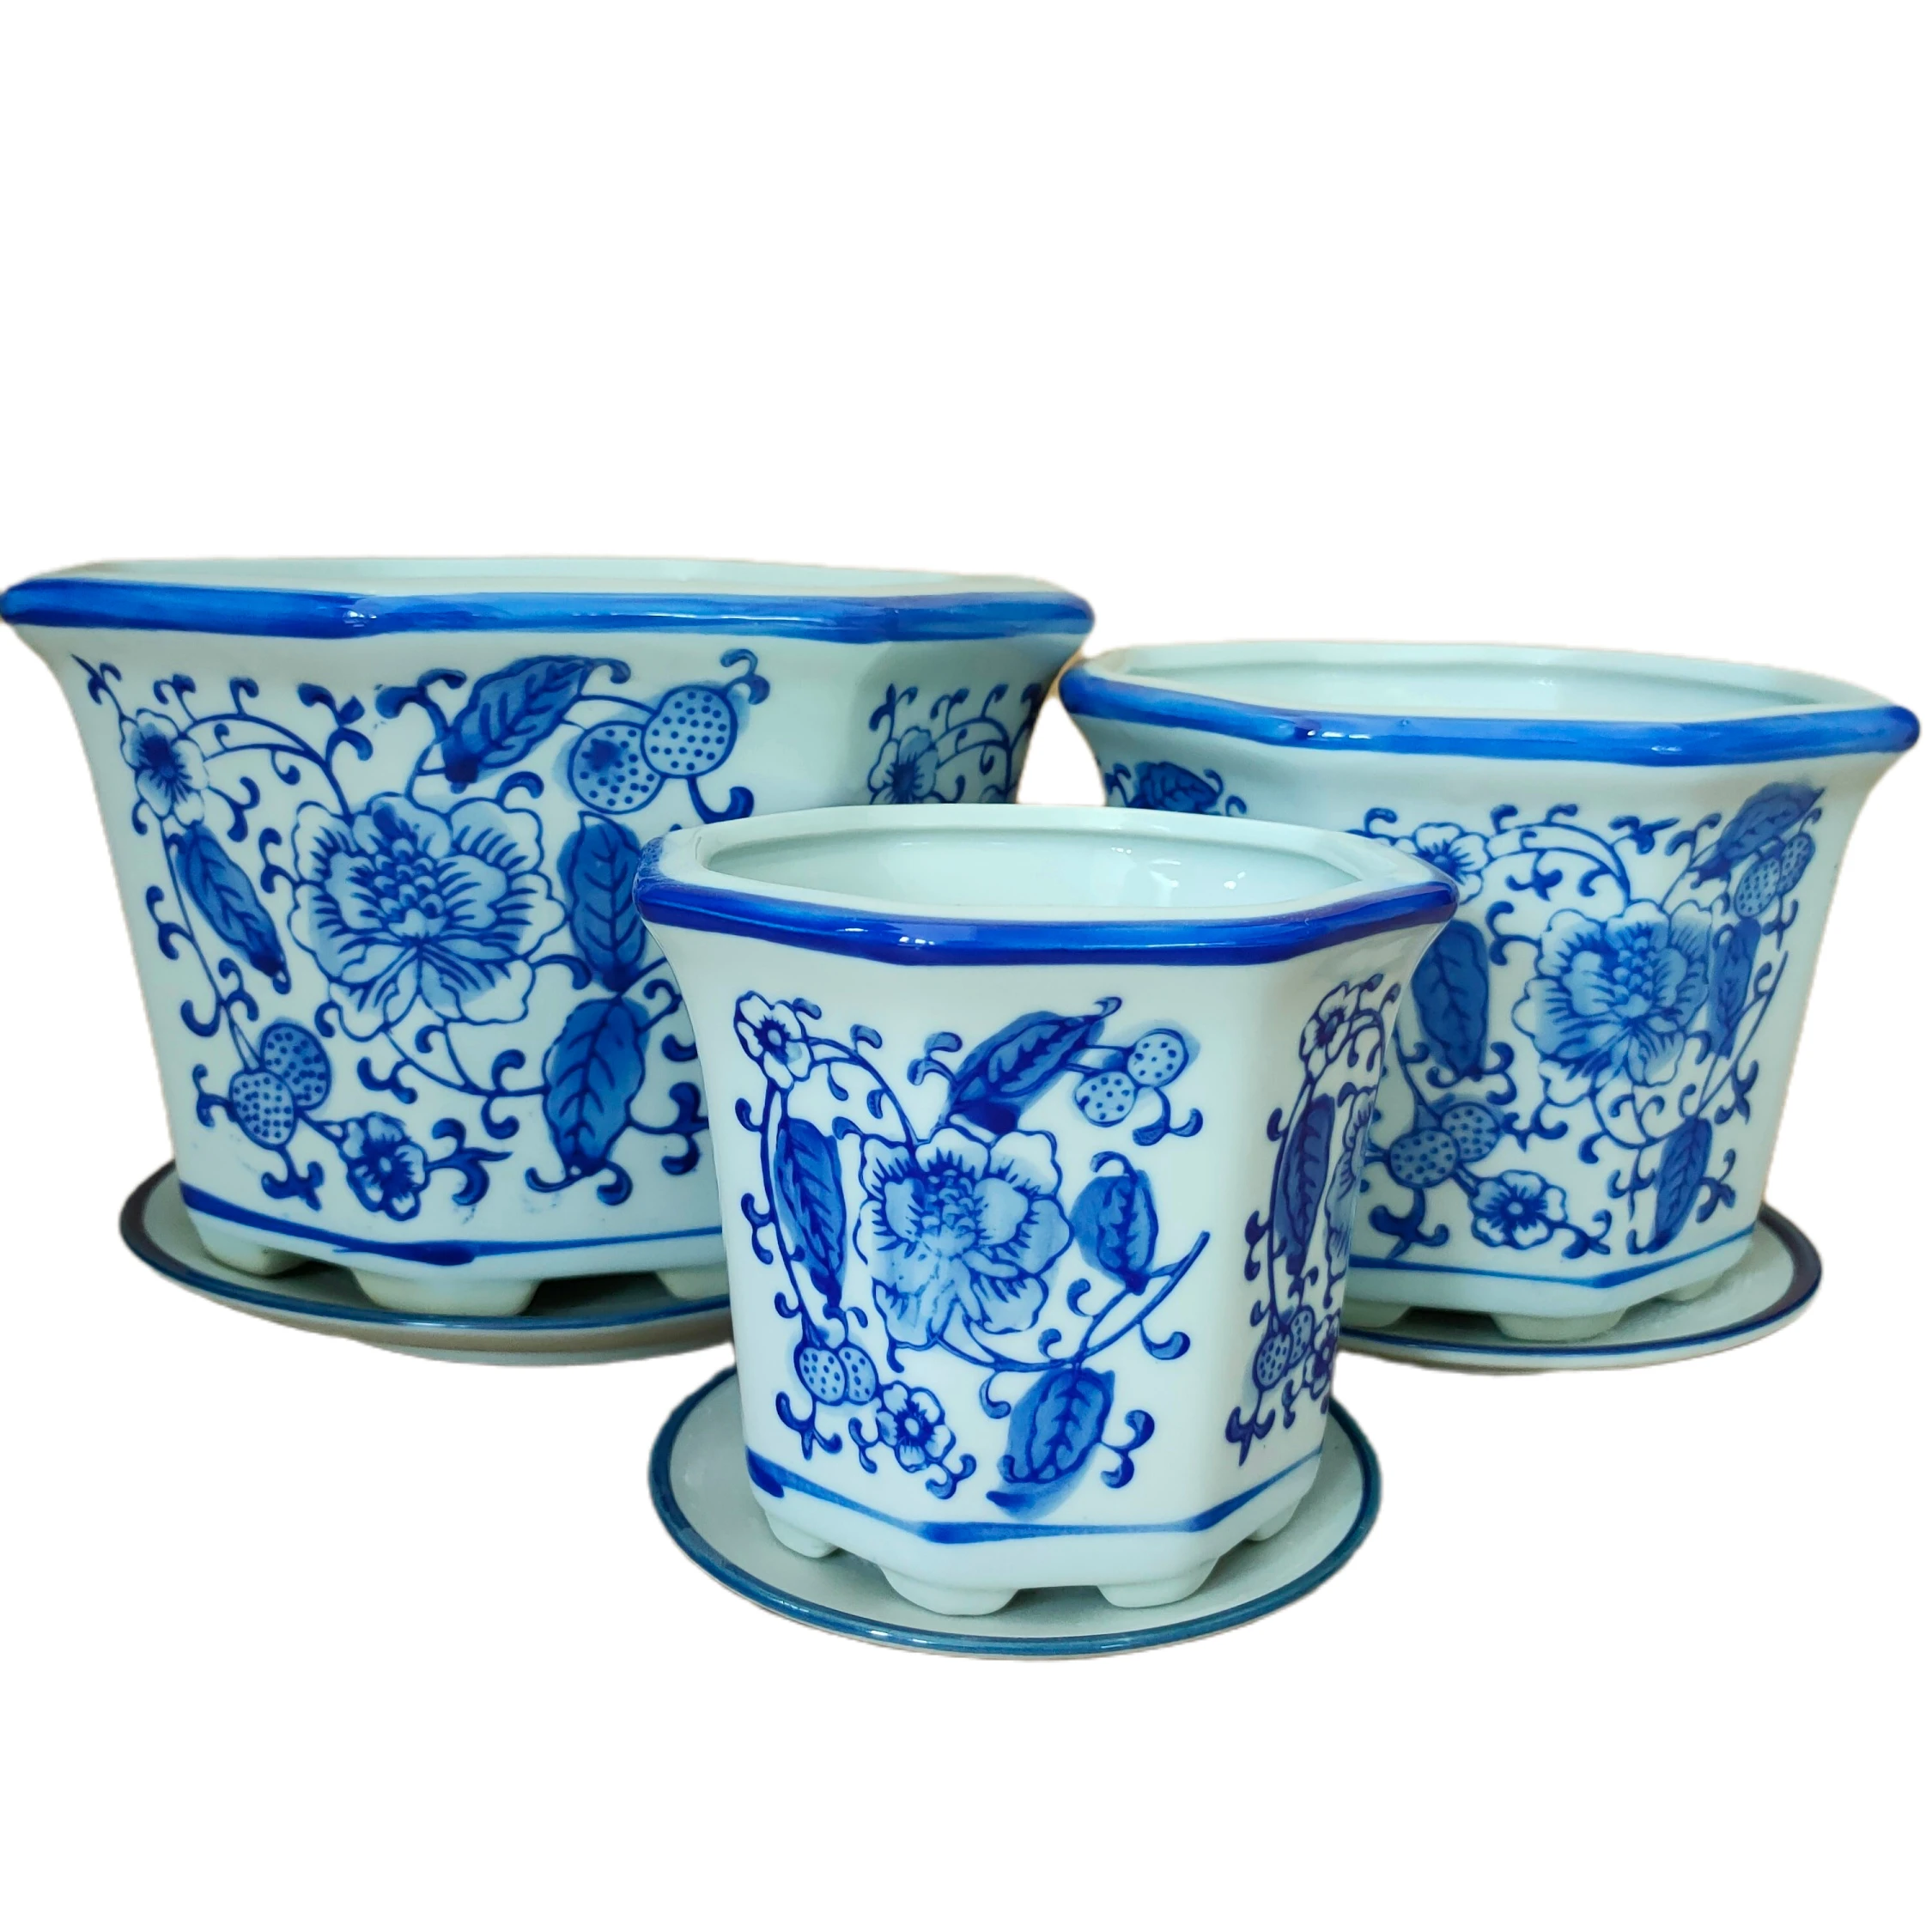 Classical Hand Paint Flower Design Ceramic Planter Blue and White Porcelain Flower Pot Set of 3